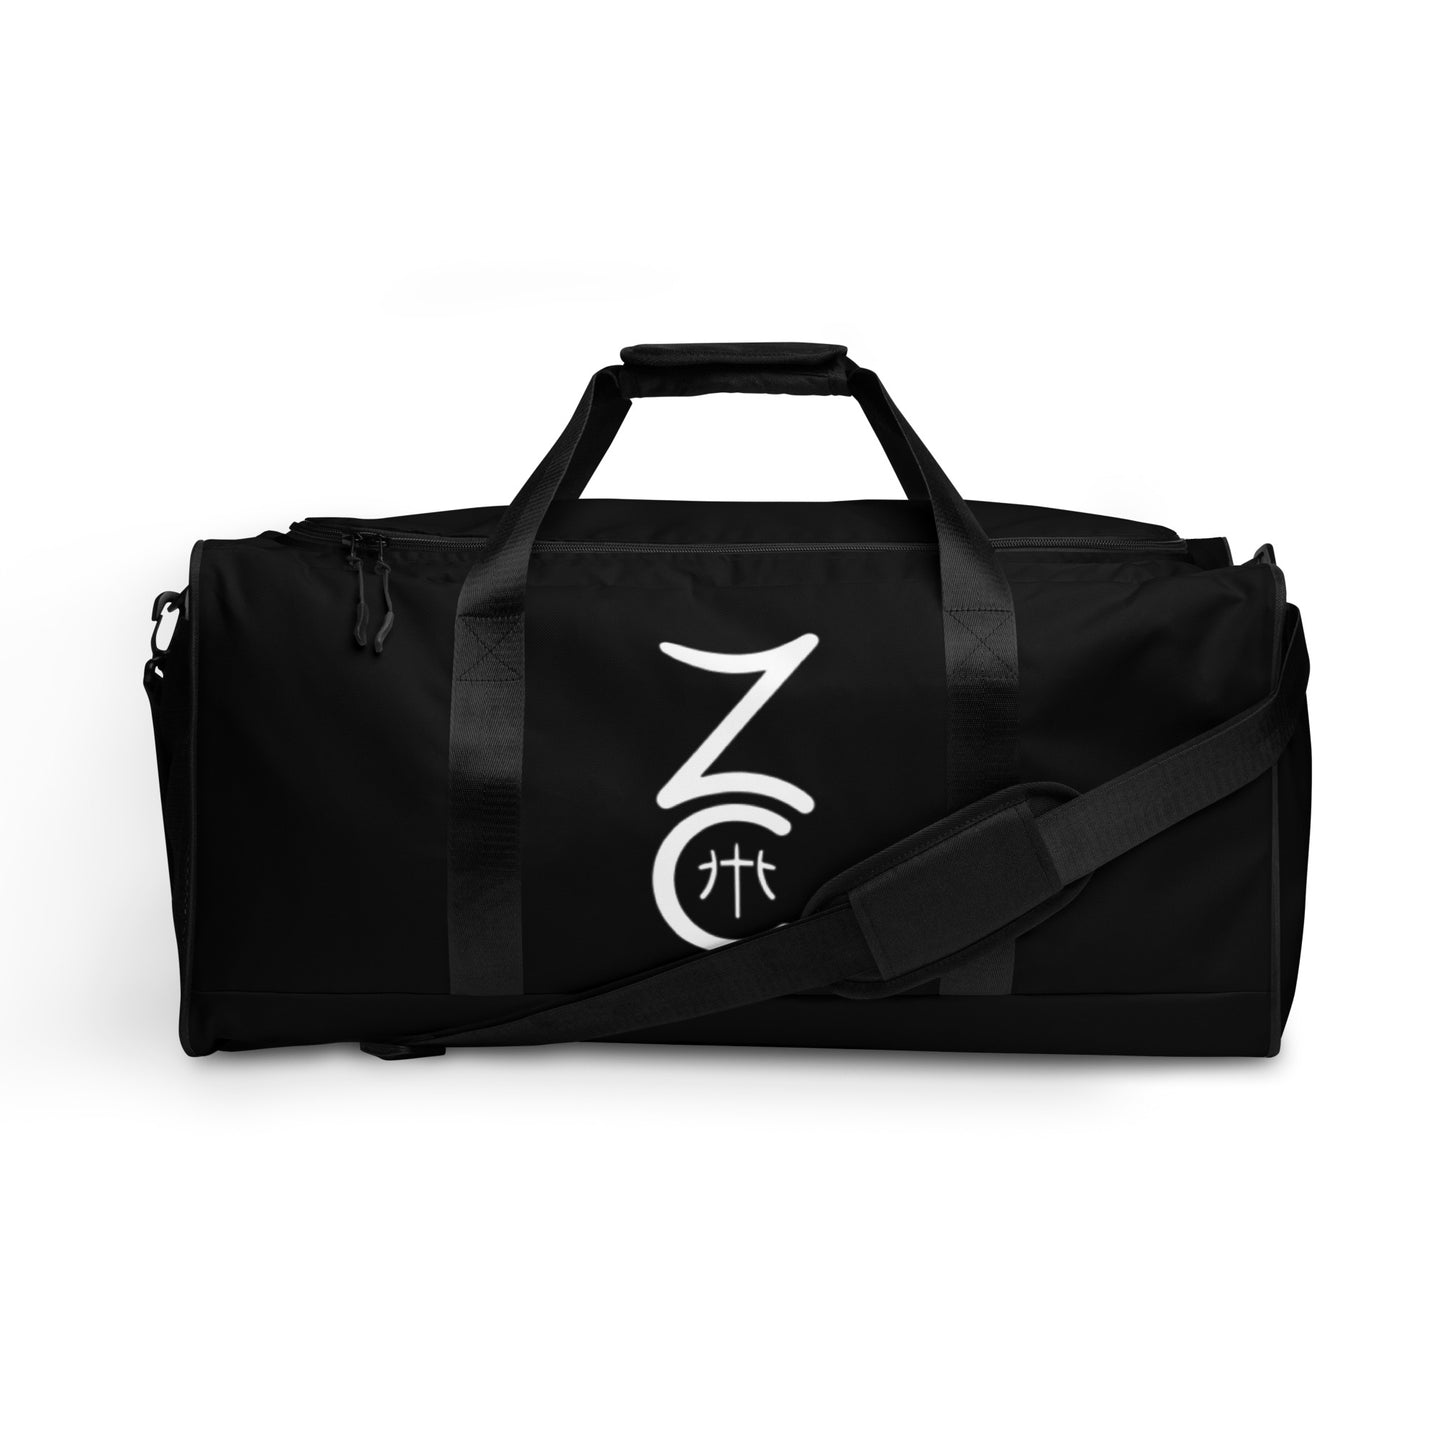 ZC Duffle bag